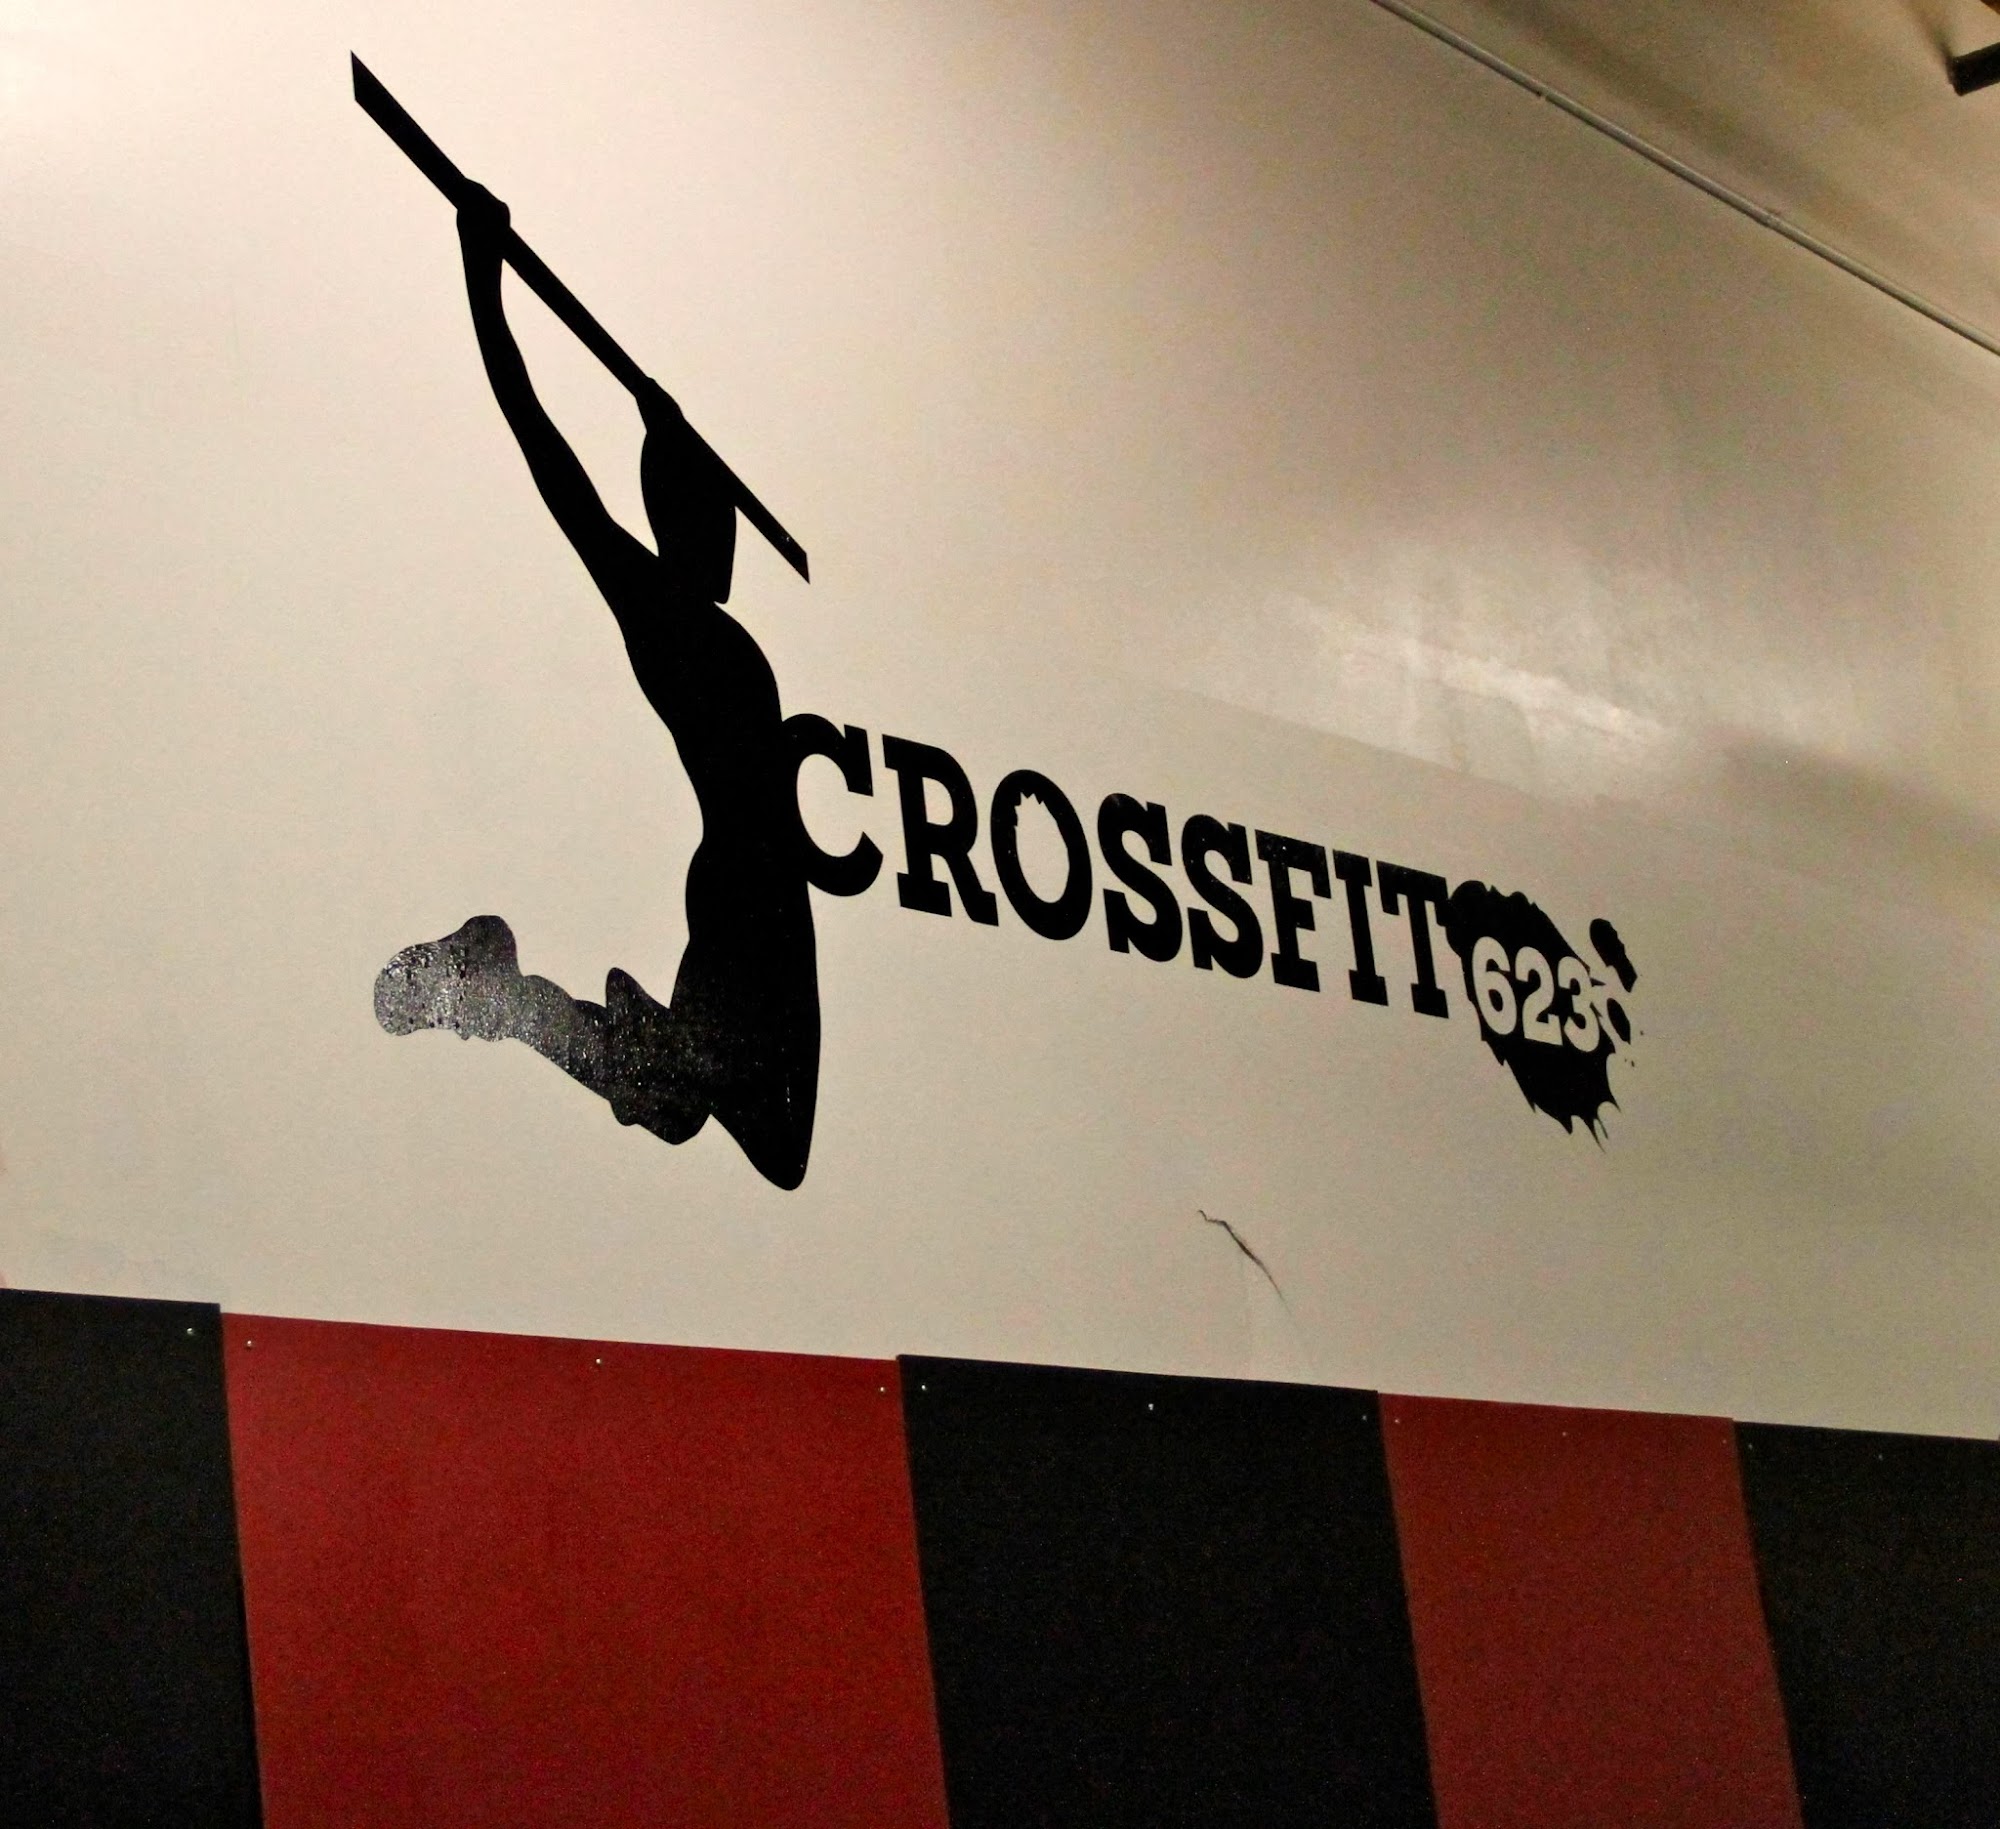 CrossFit 623